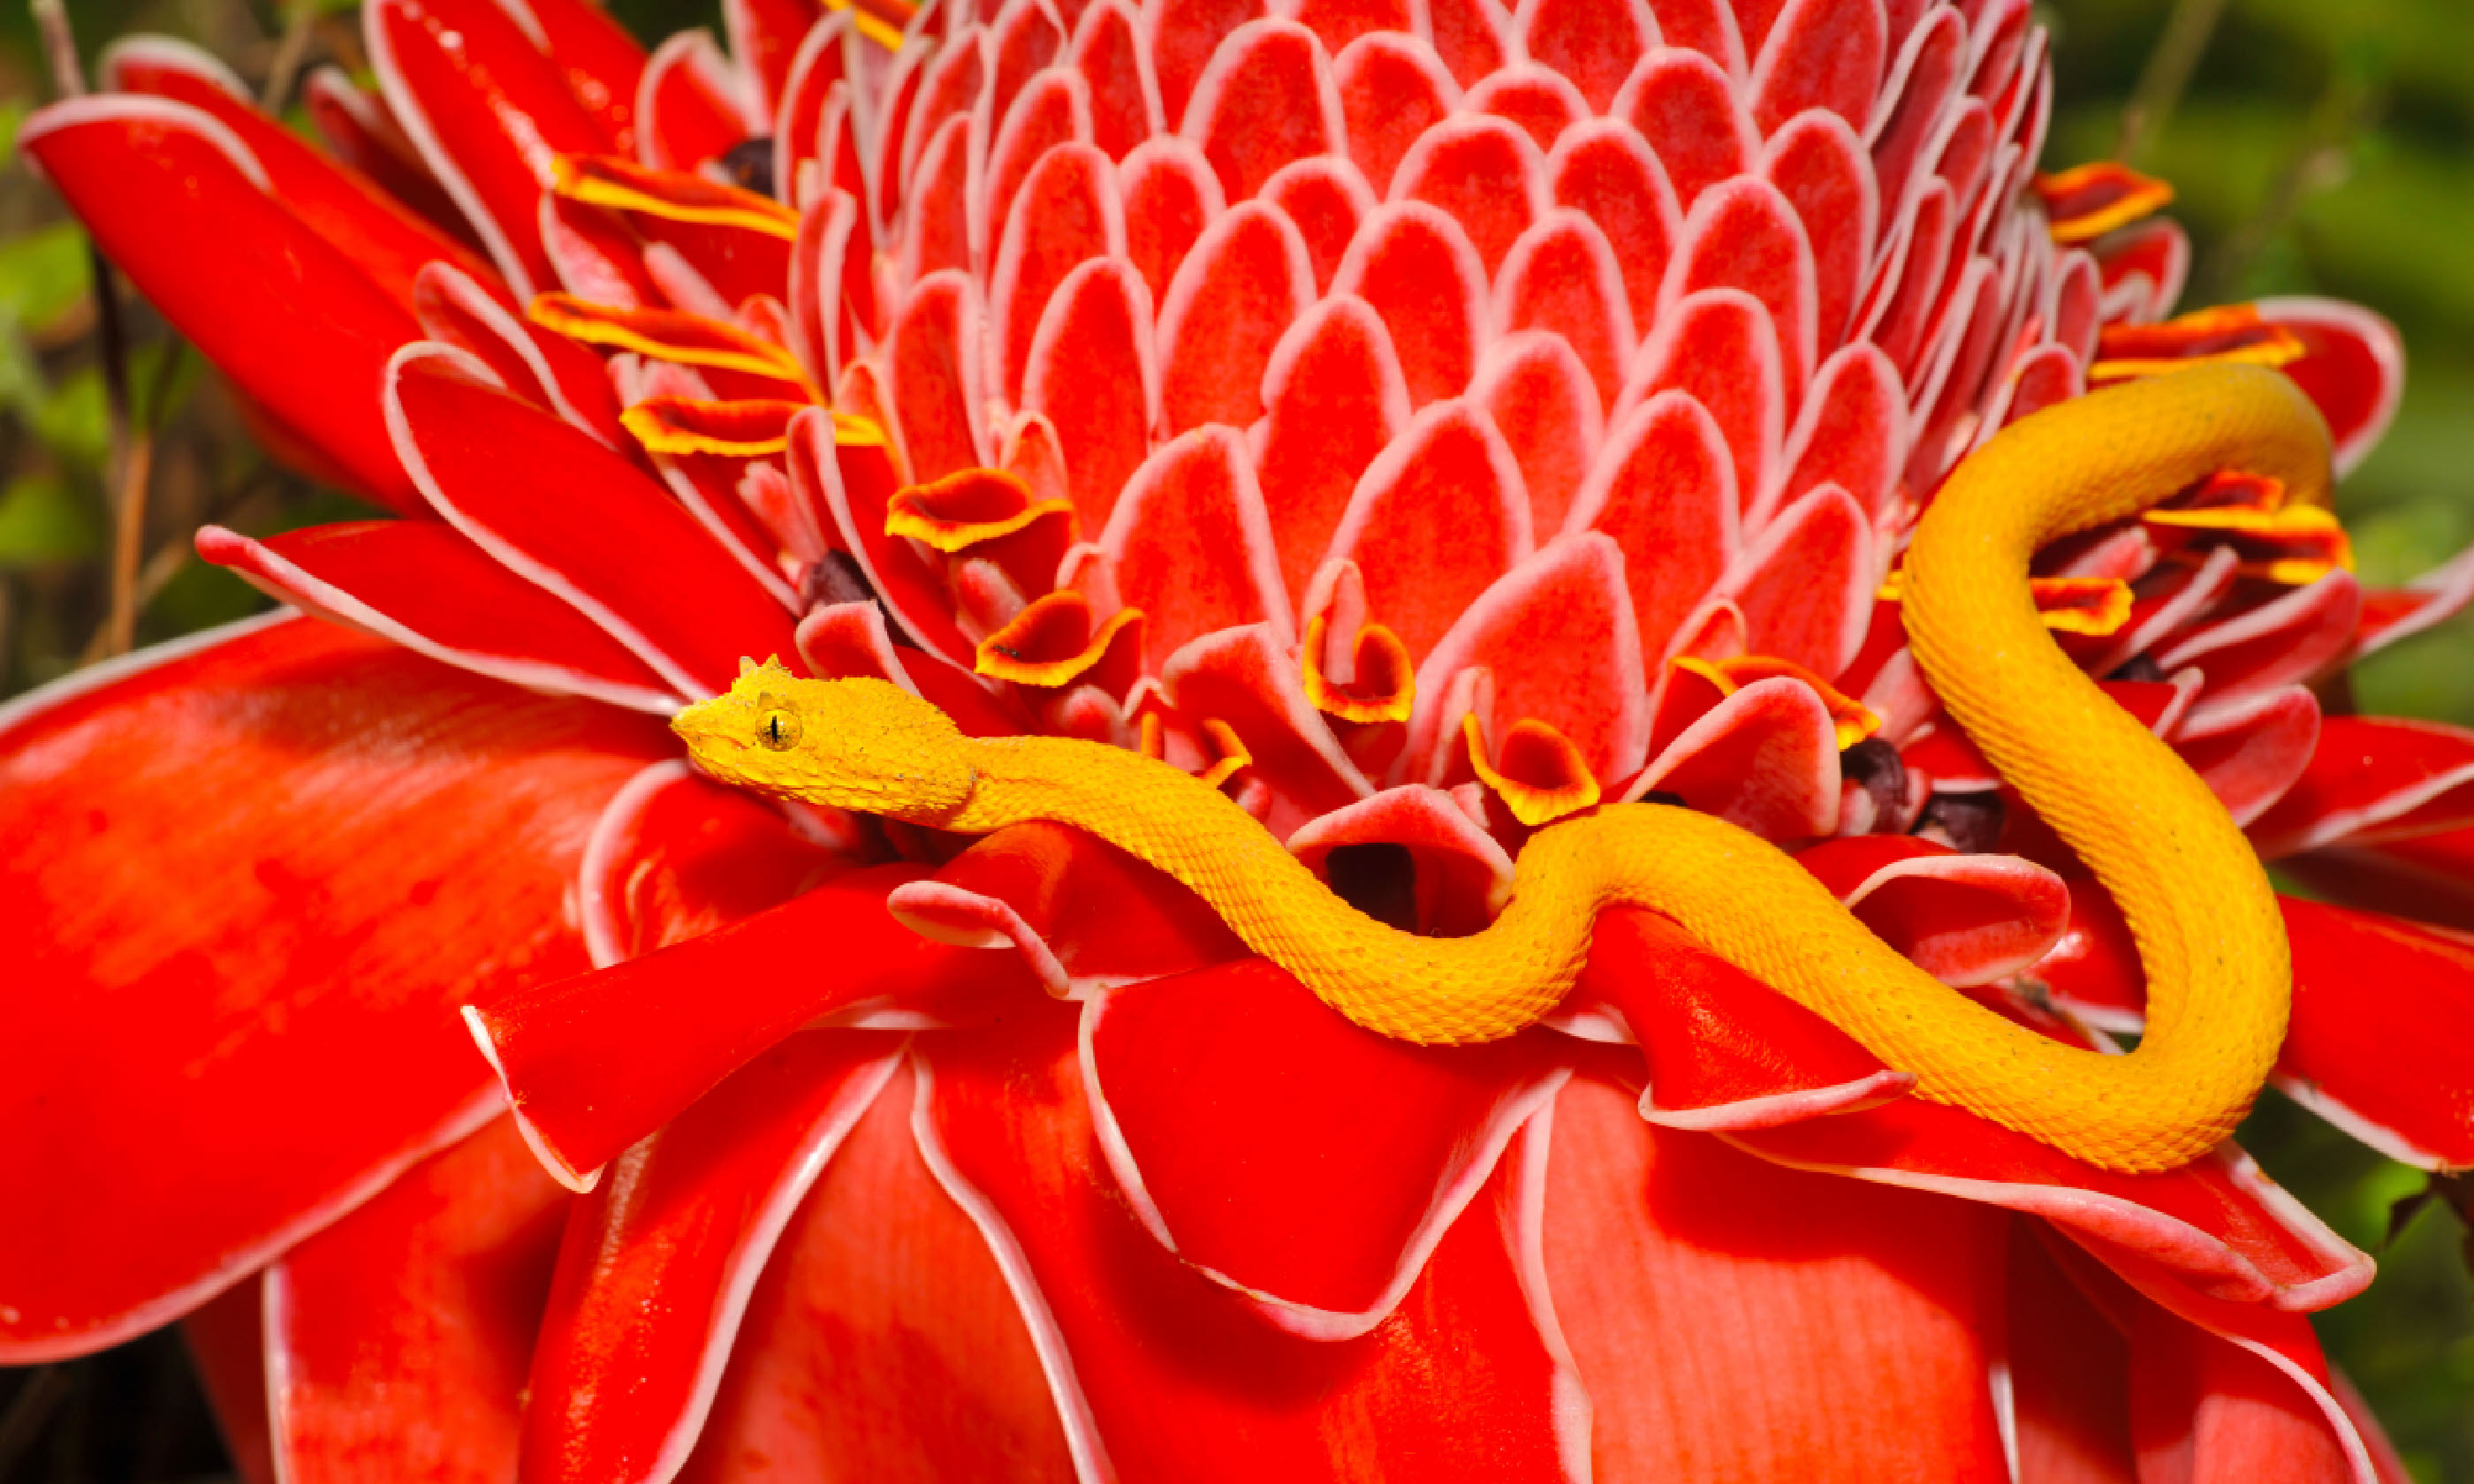 Venomous yellow eyelash pit viper (Shutterstock)